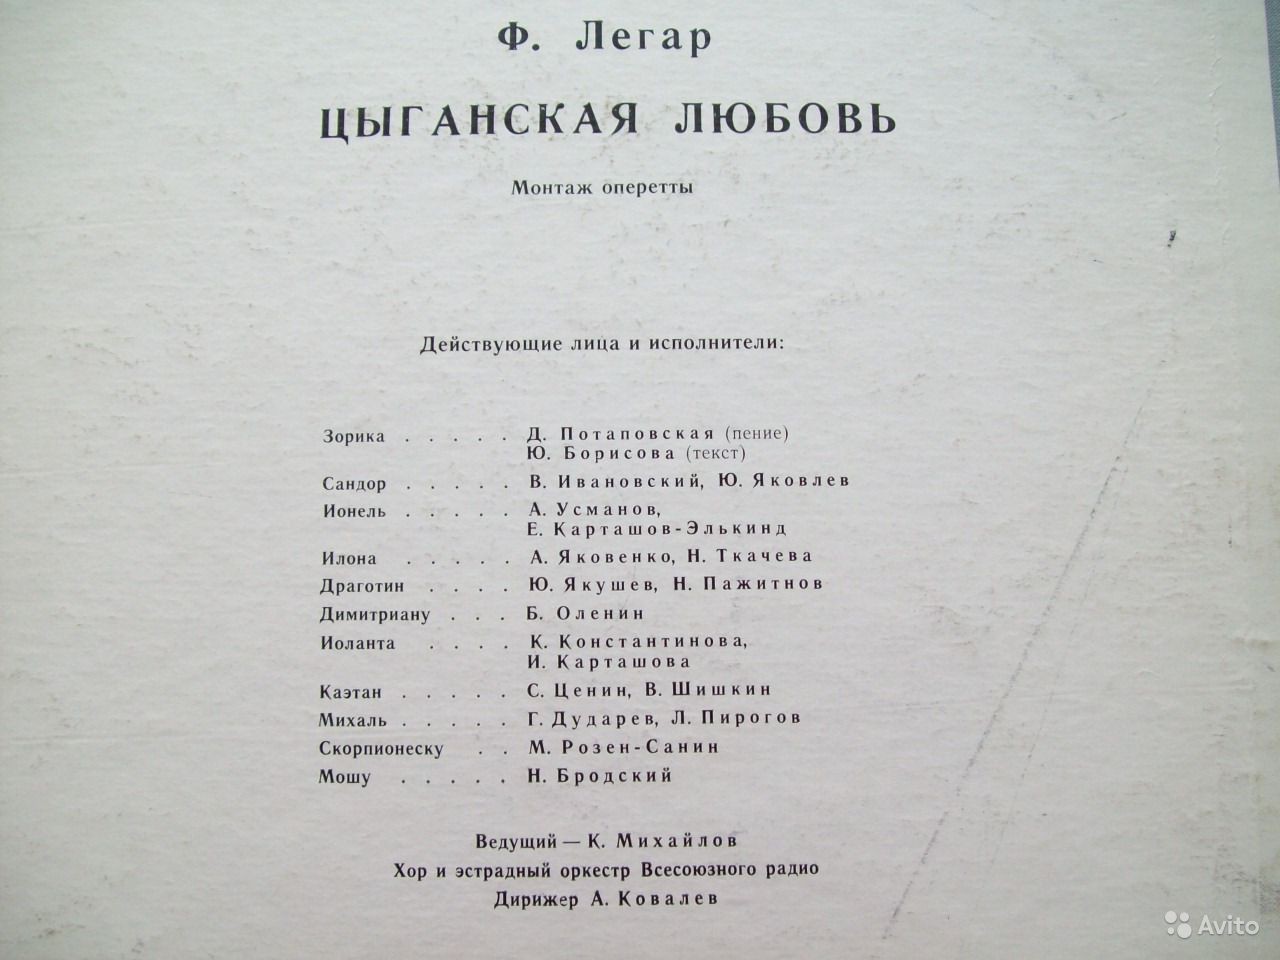 Ф. ЛЕГАР (1870-1948): «Цыганская любовь», монтаж оперетты